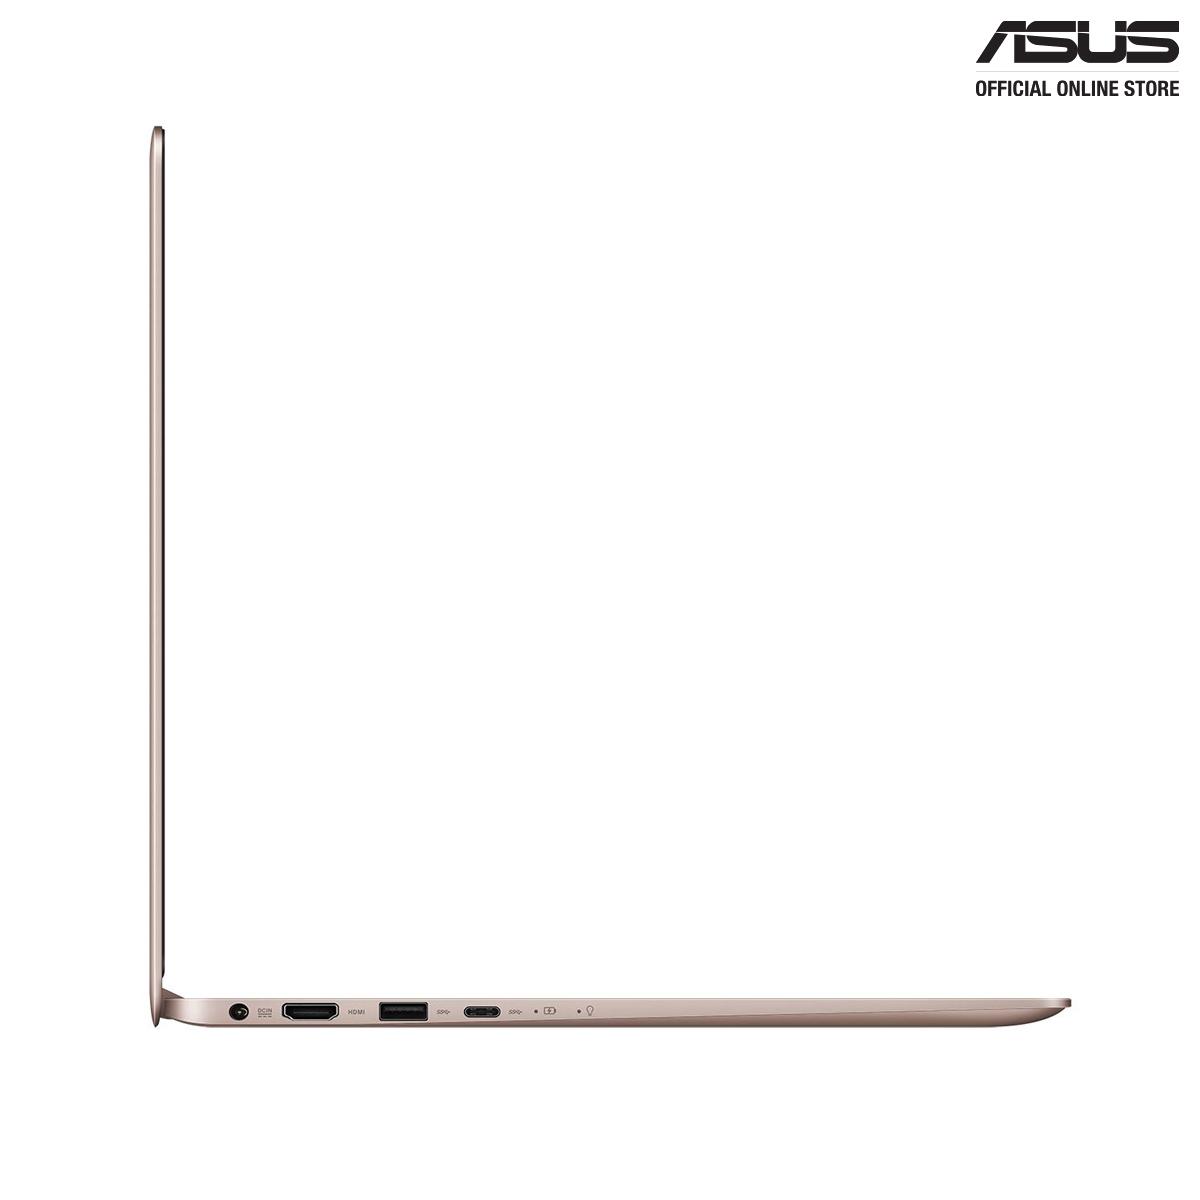 ASUS ZenBook UX331UAL-EG058T (Rose Gold)